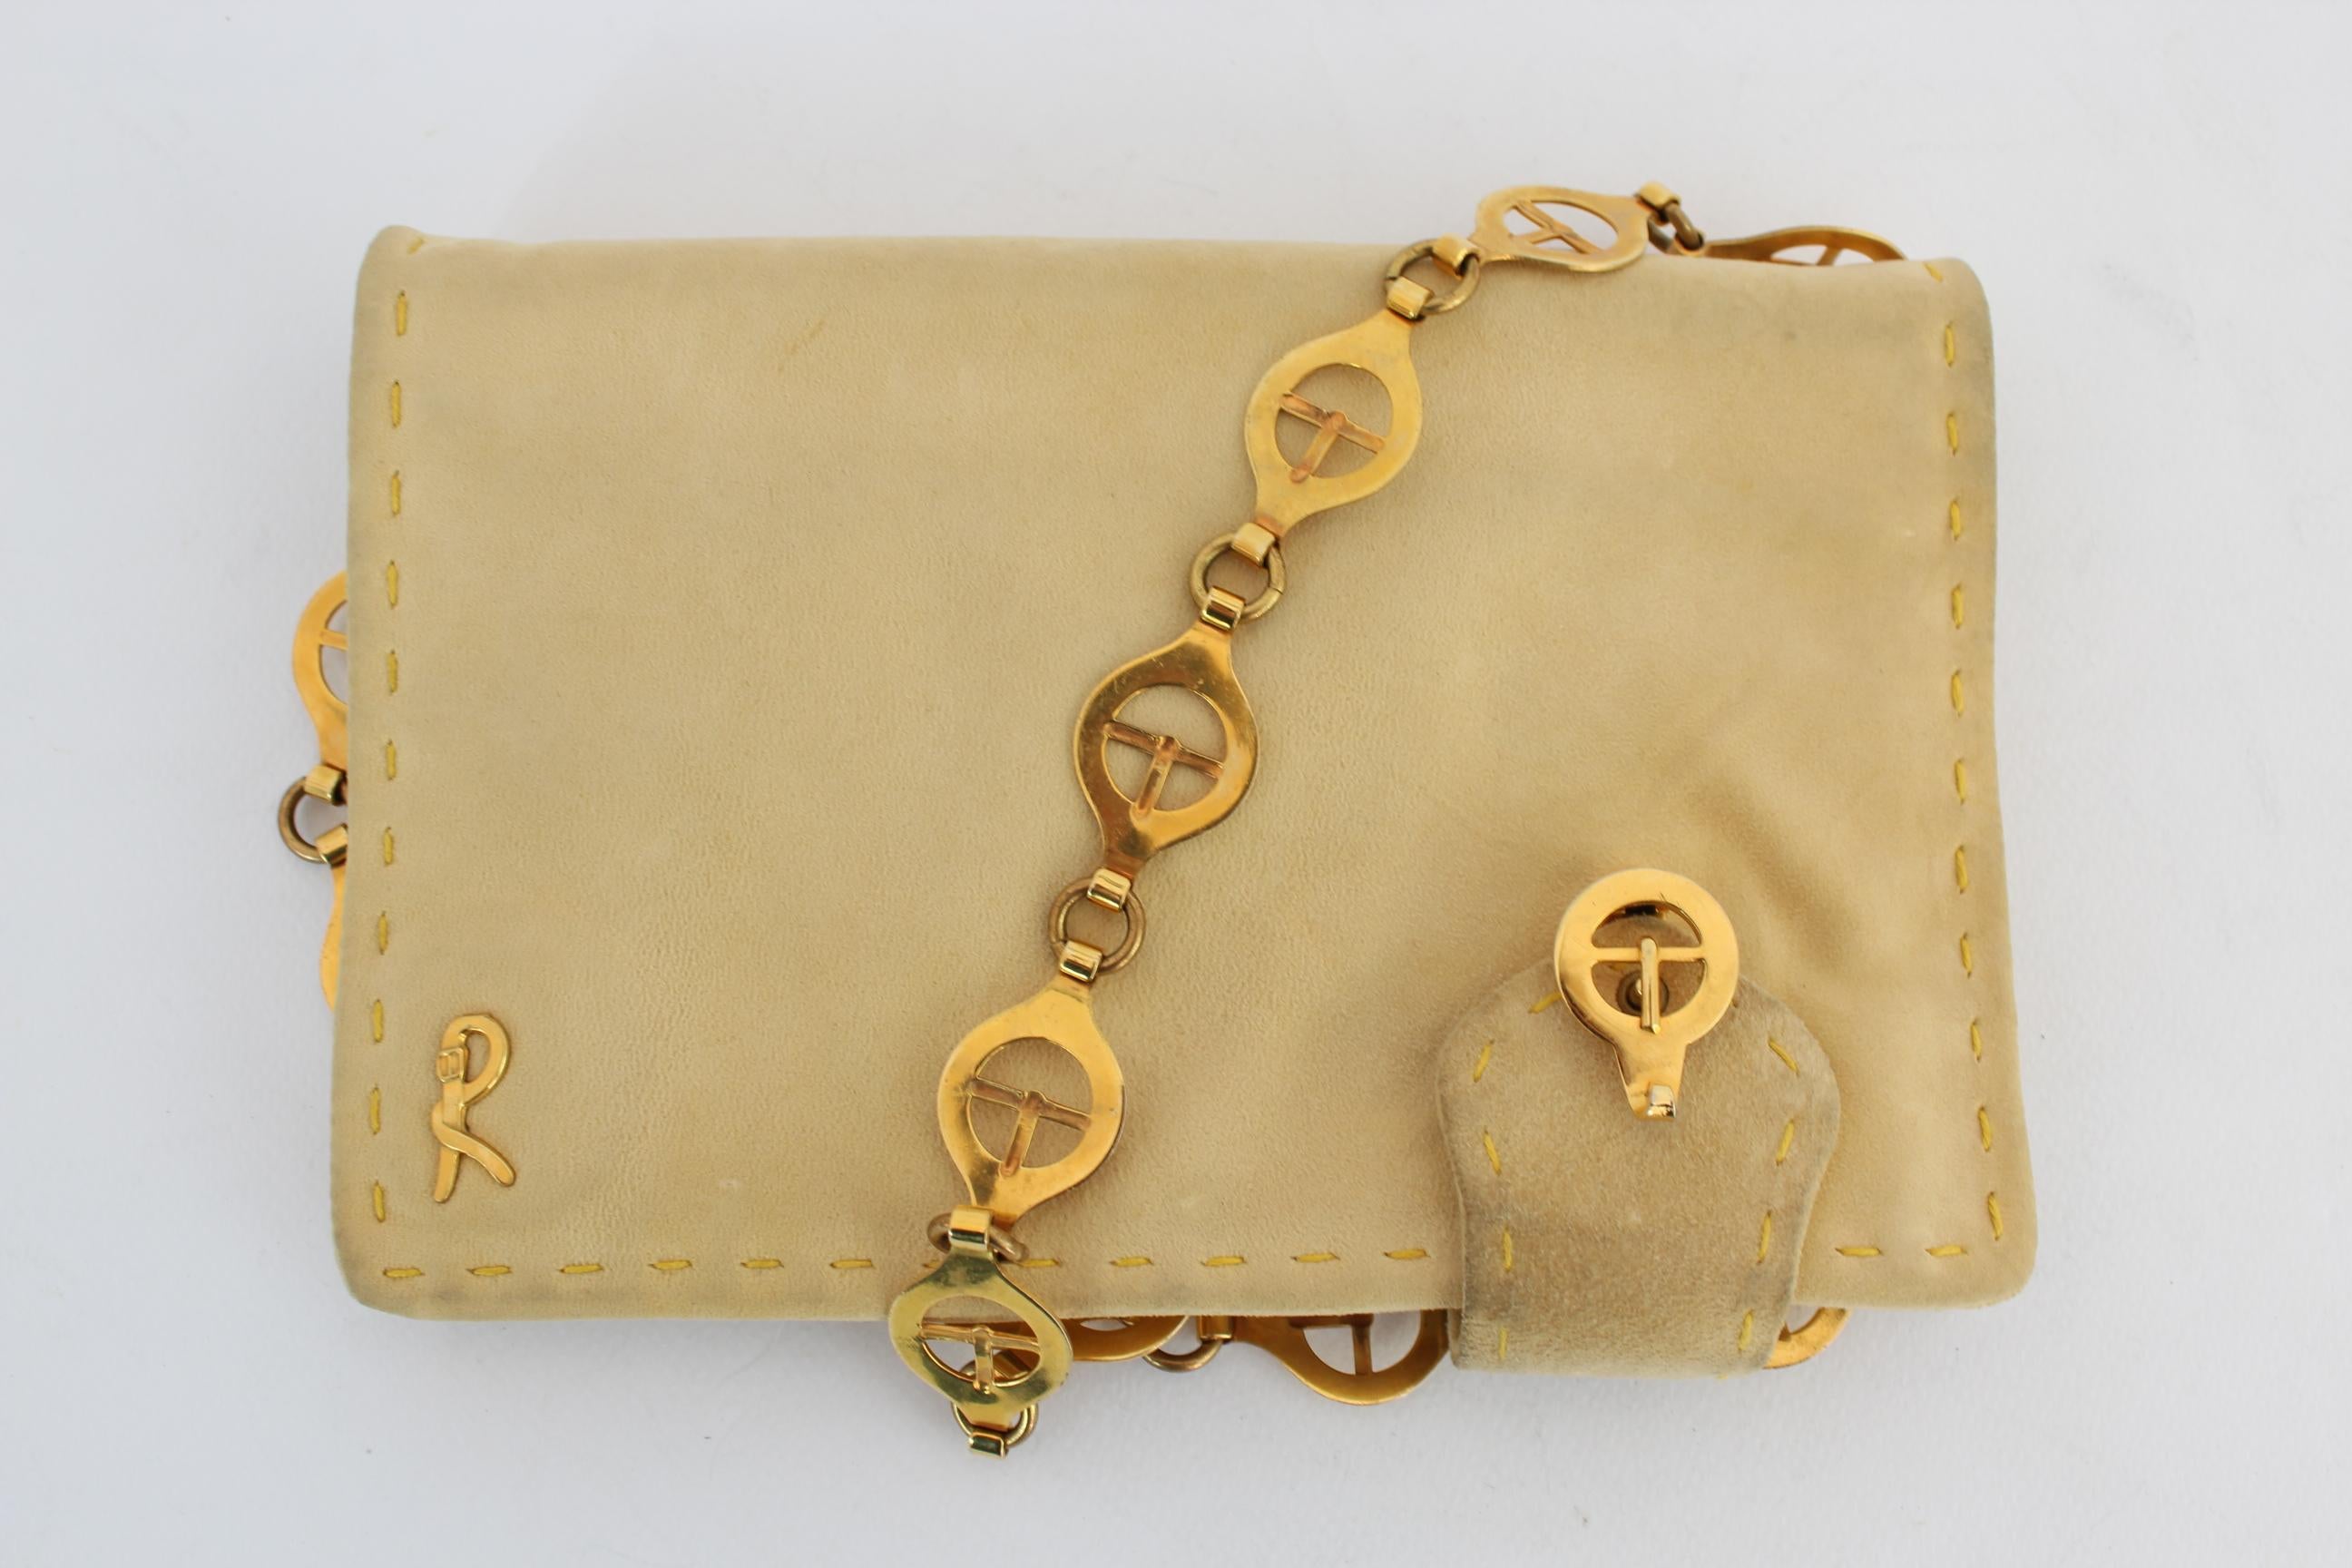 Roberta di Camerino Leather Suede Beige Golden Chain Strap Shoulder Bag 1990s 3